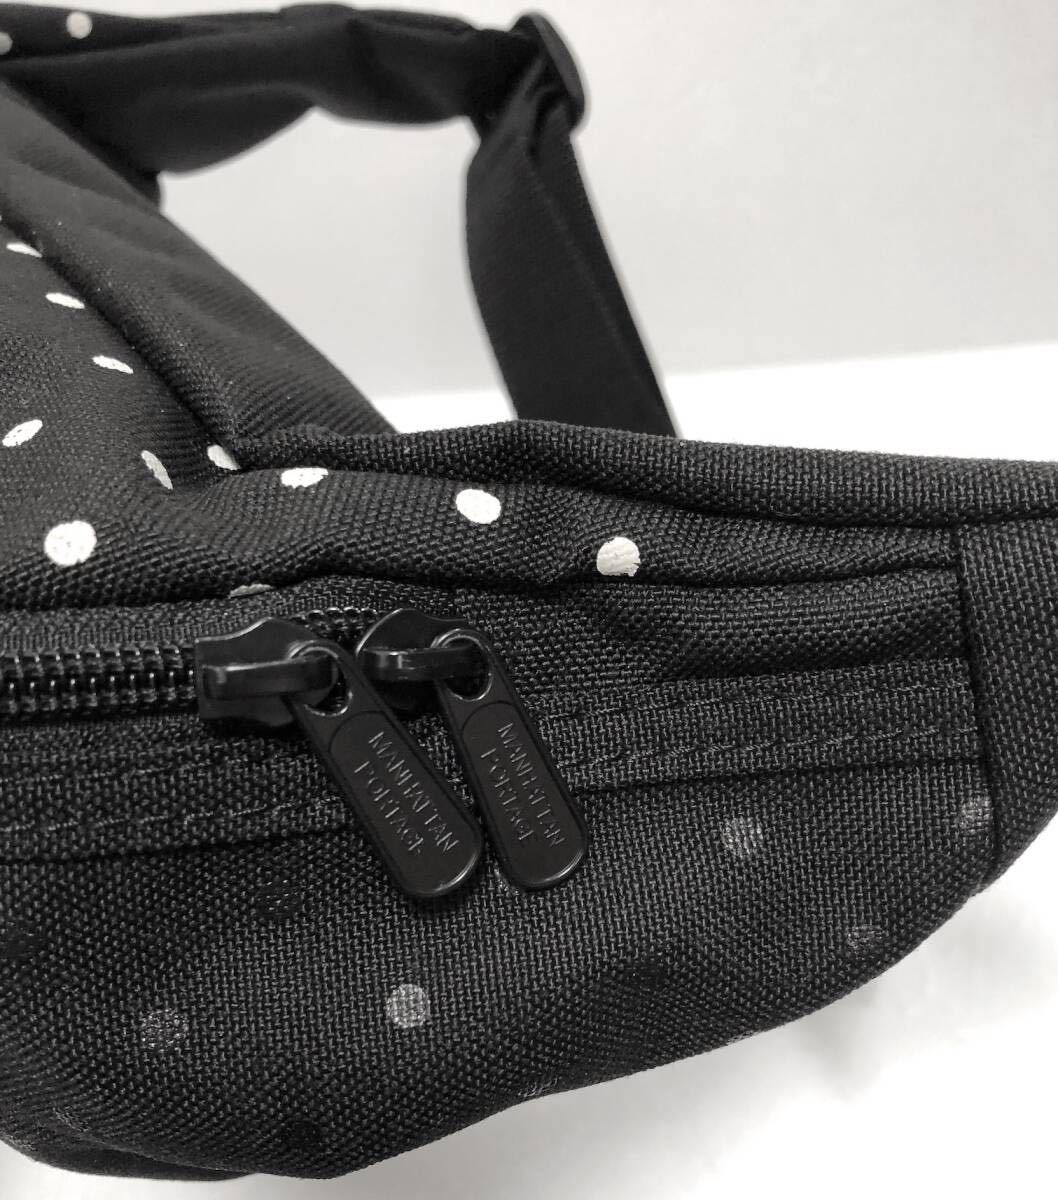  Manhattan Poe te-ji2402173 waist bag black black dot body bag shoulder bag 